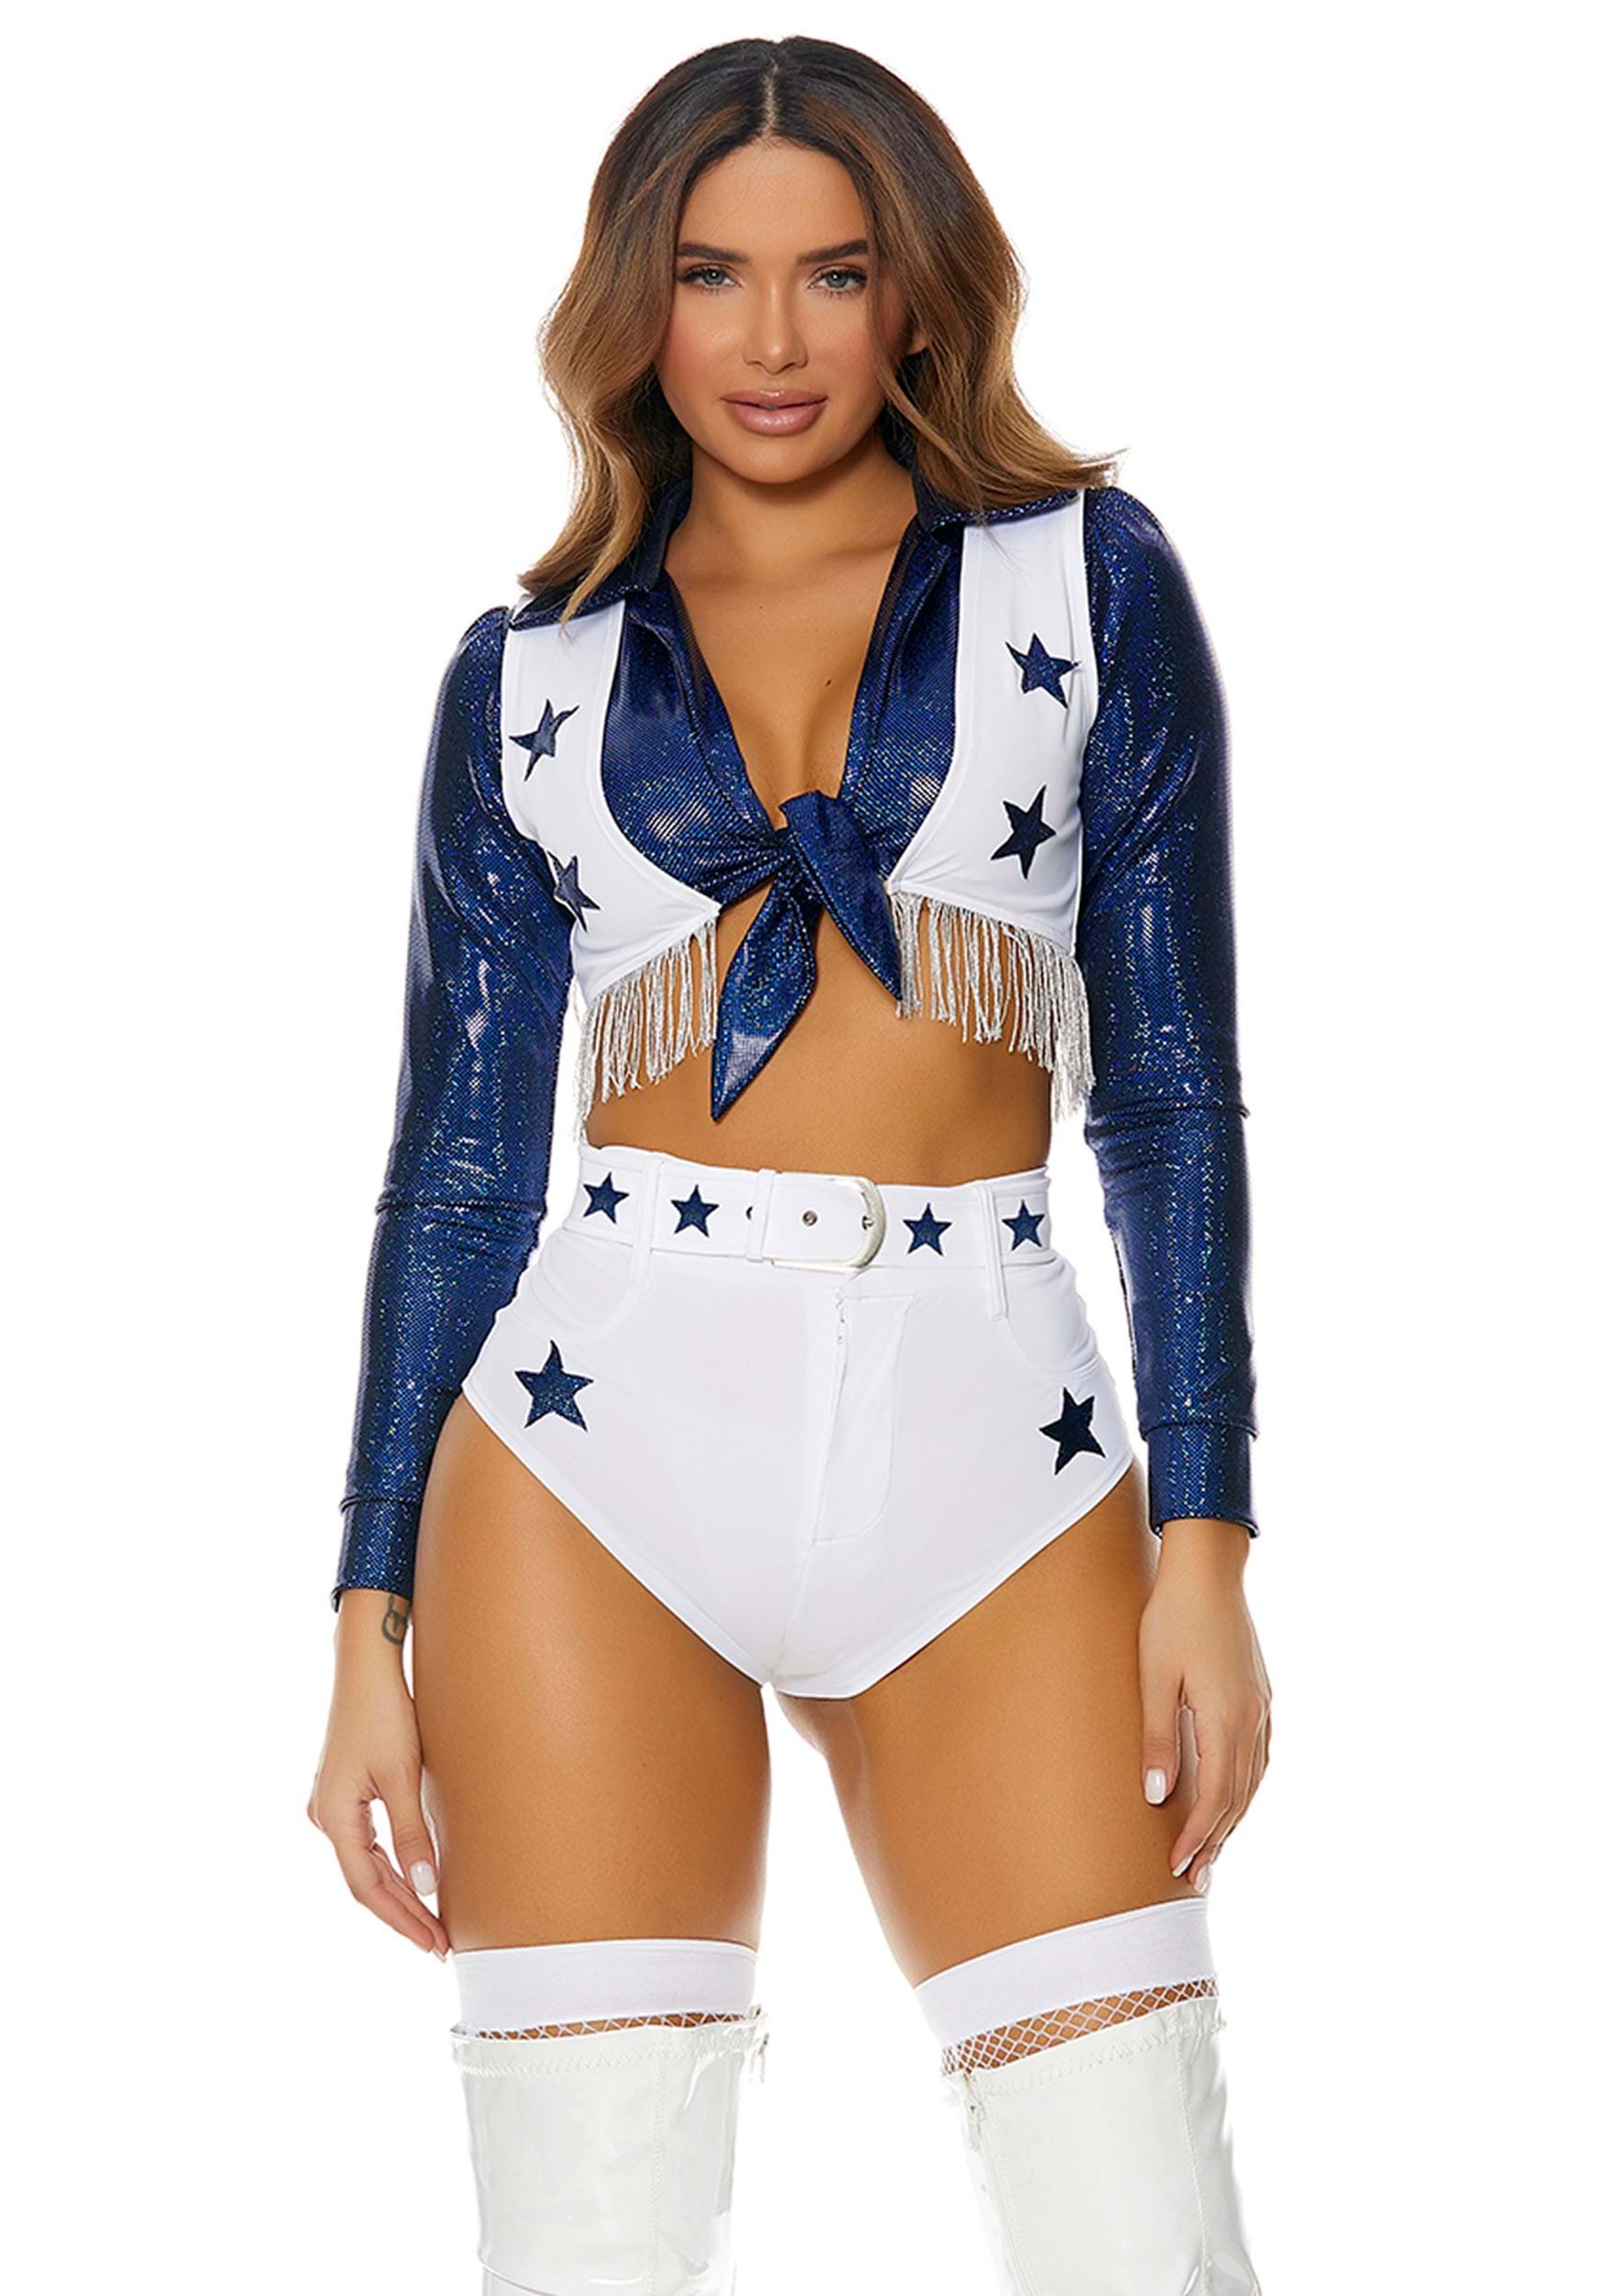 https://images.halloweencostumes.eu/products/72167/1-1/womens-seeing-stars-cheerleader-costume.jpg